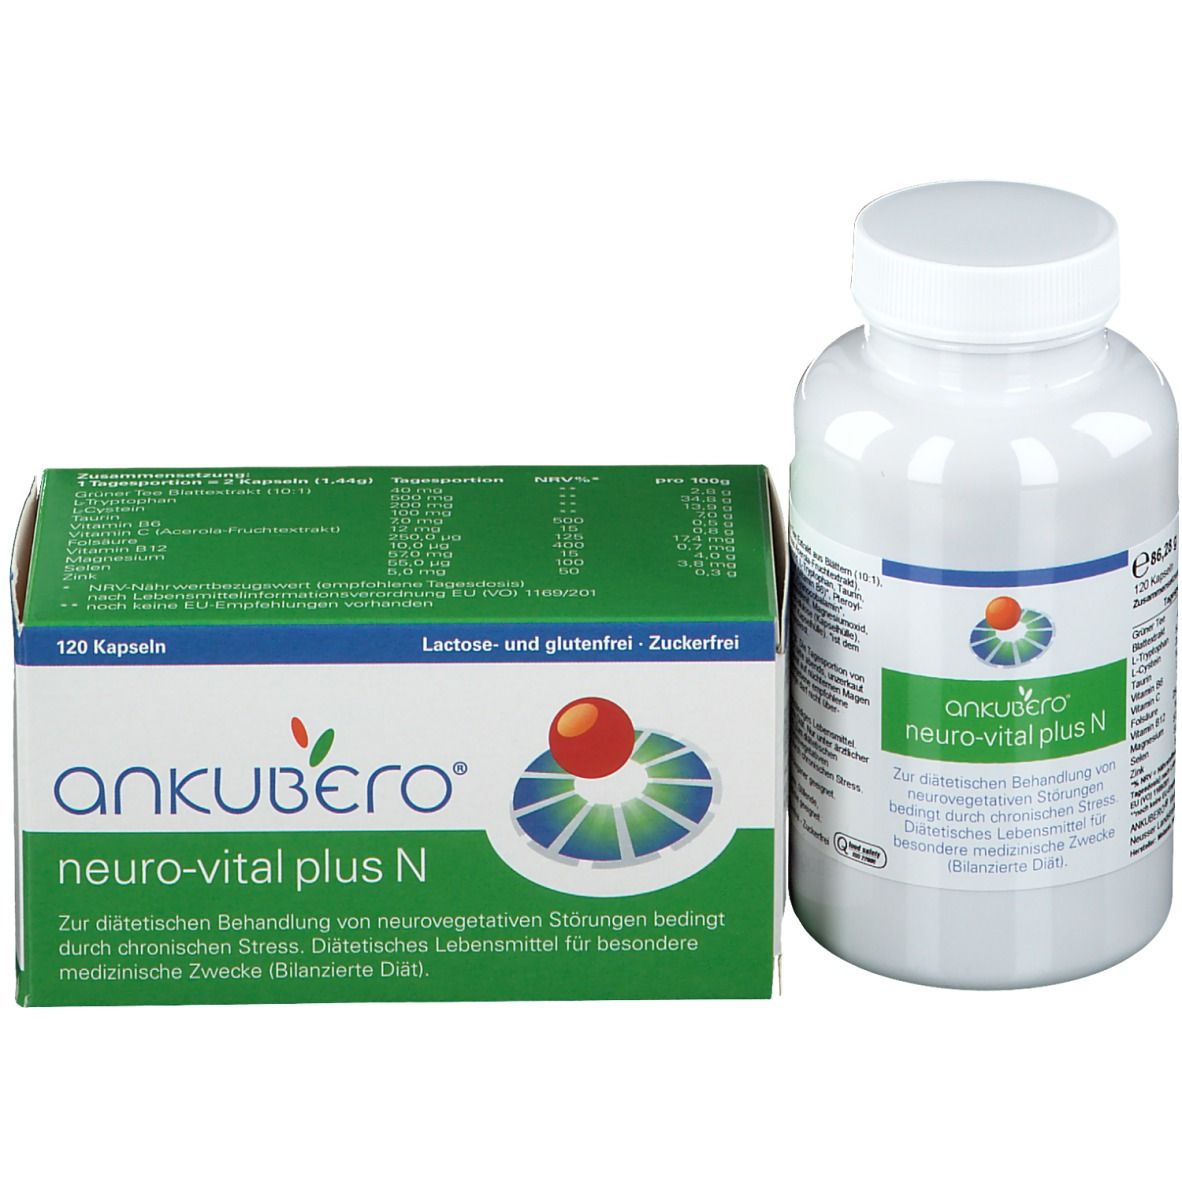 ANKUBERO® neuro-vital plus N